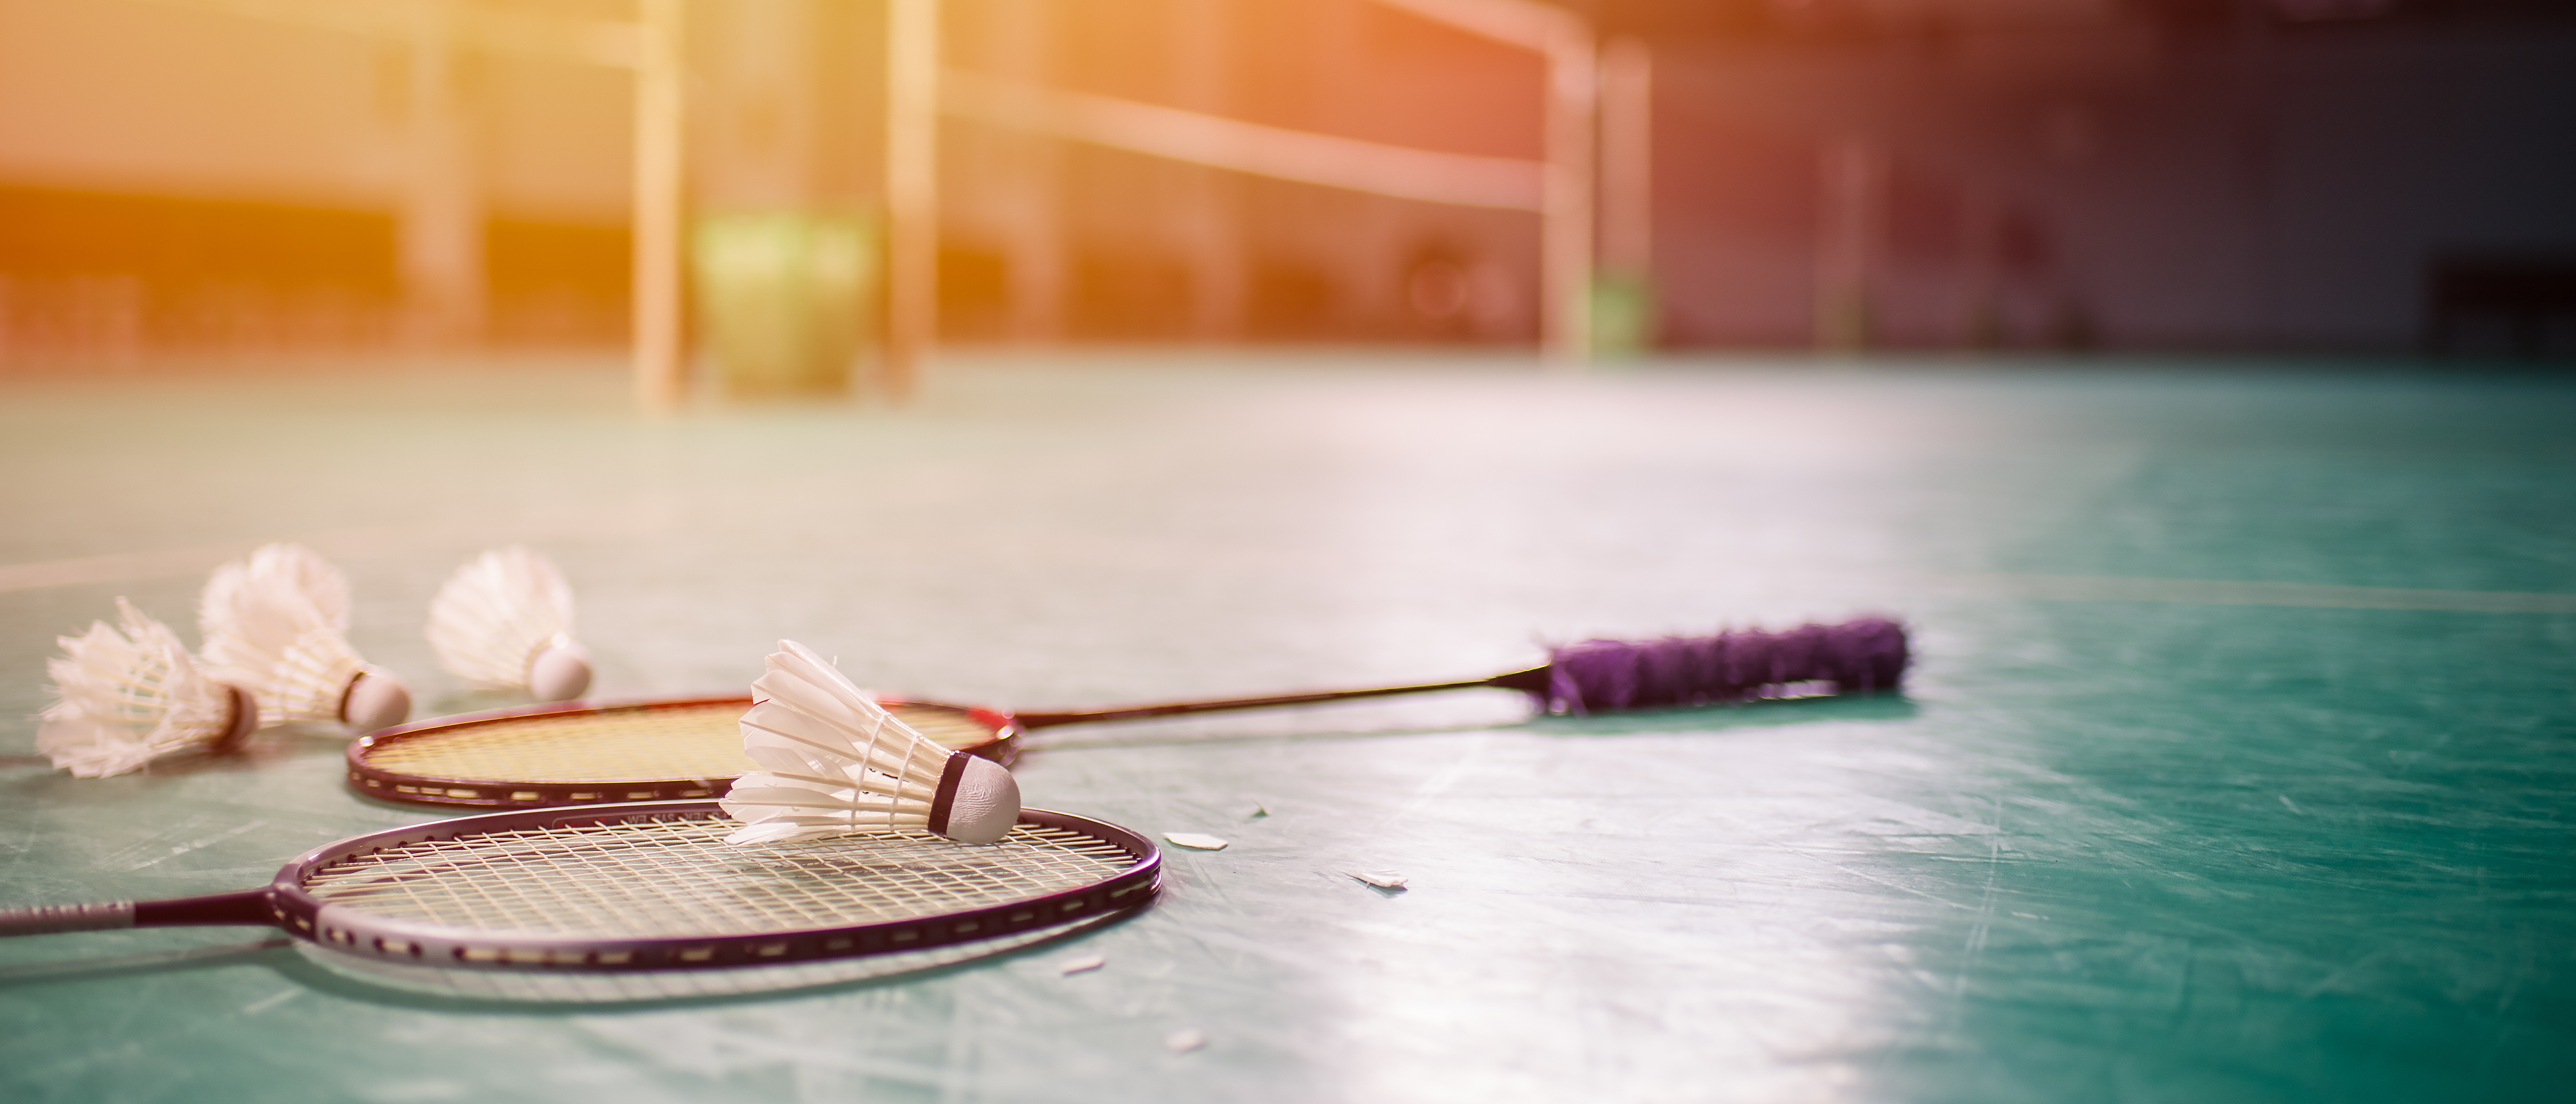 Badminton im Alternate Sportpark Linden